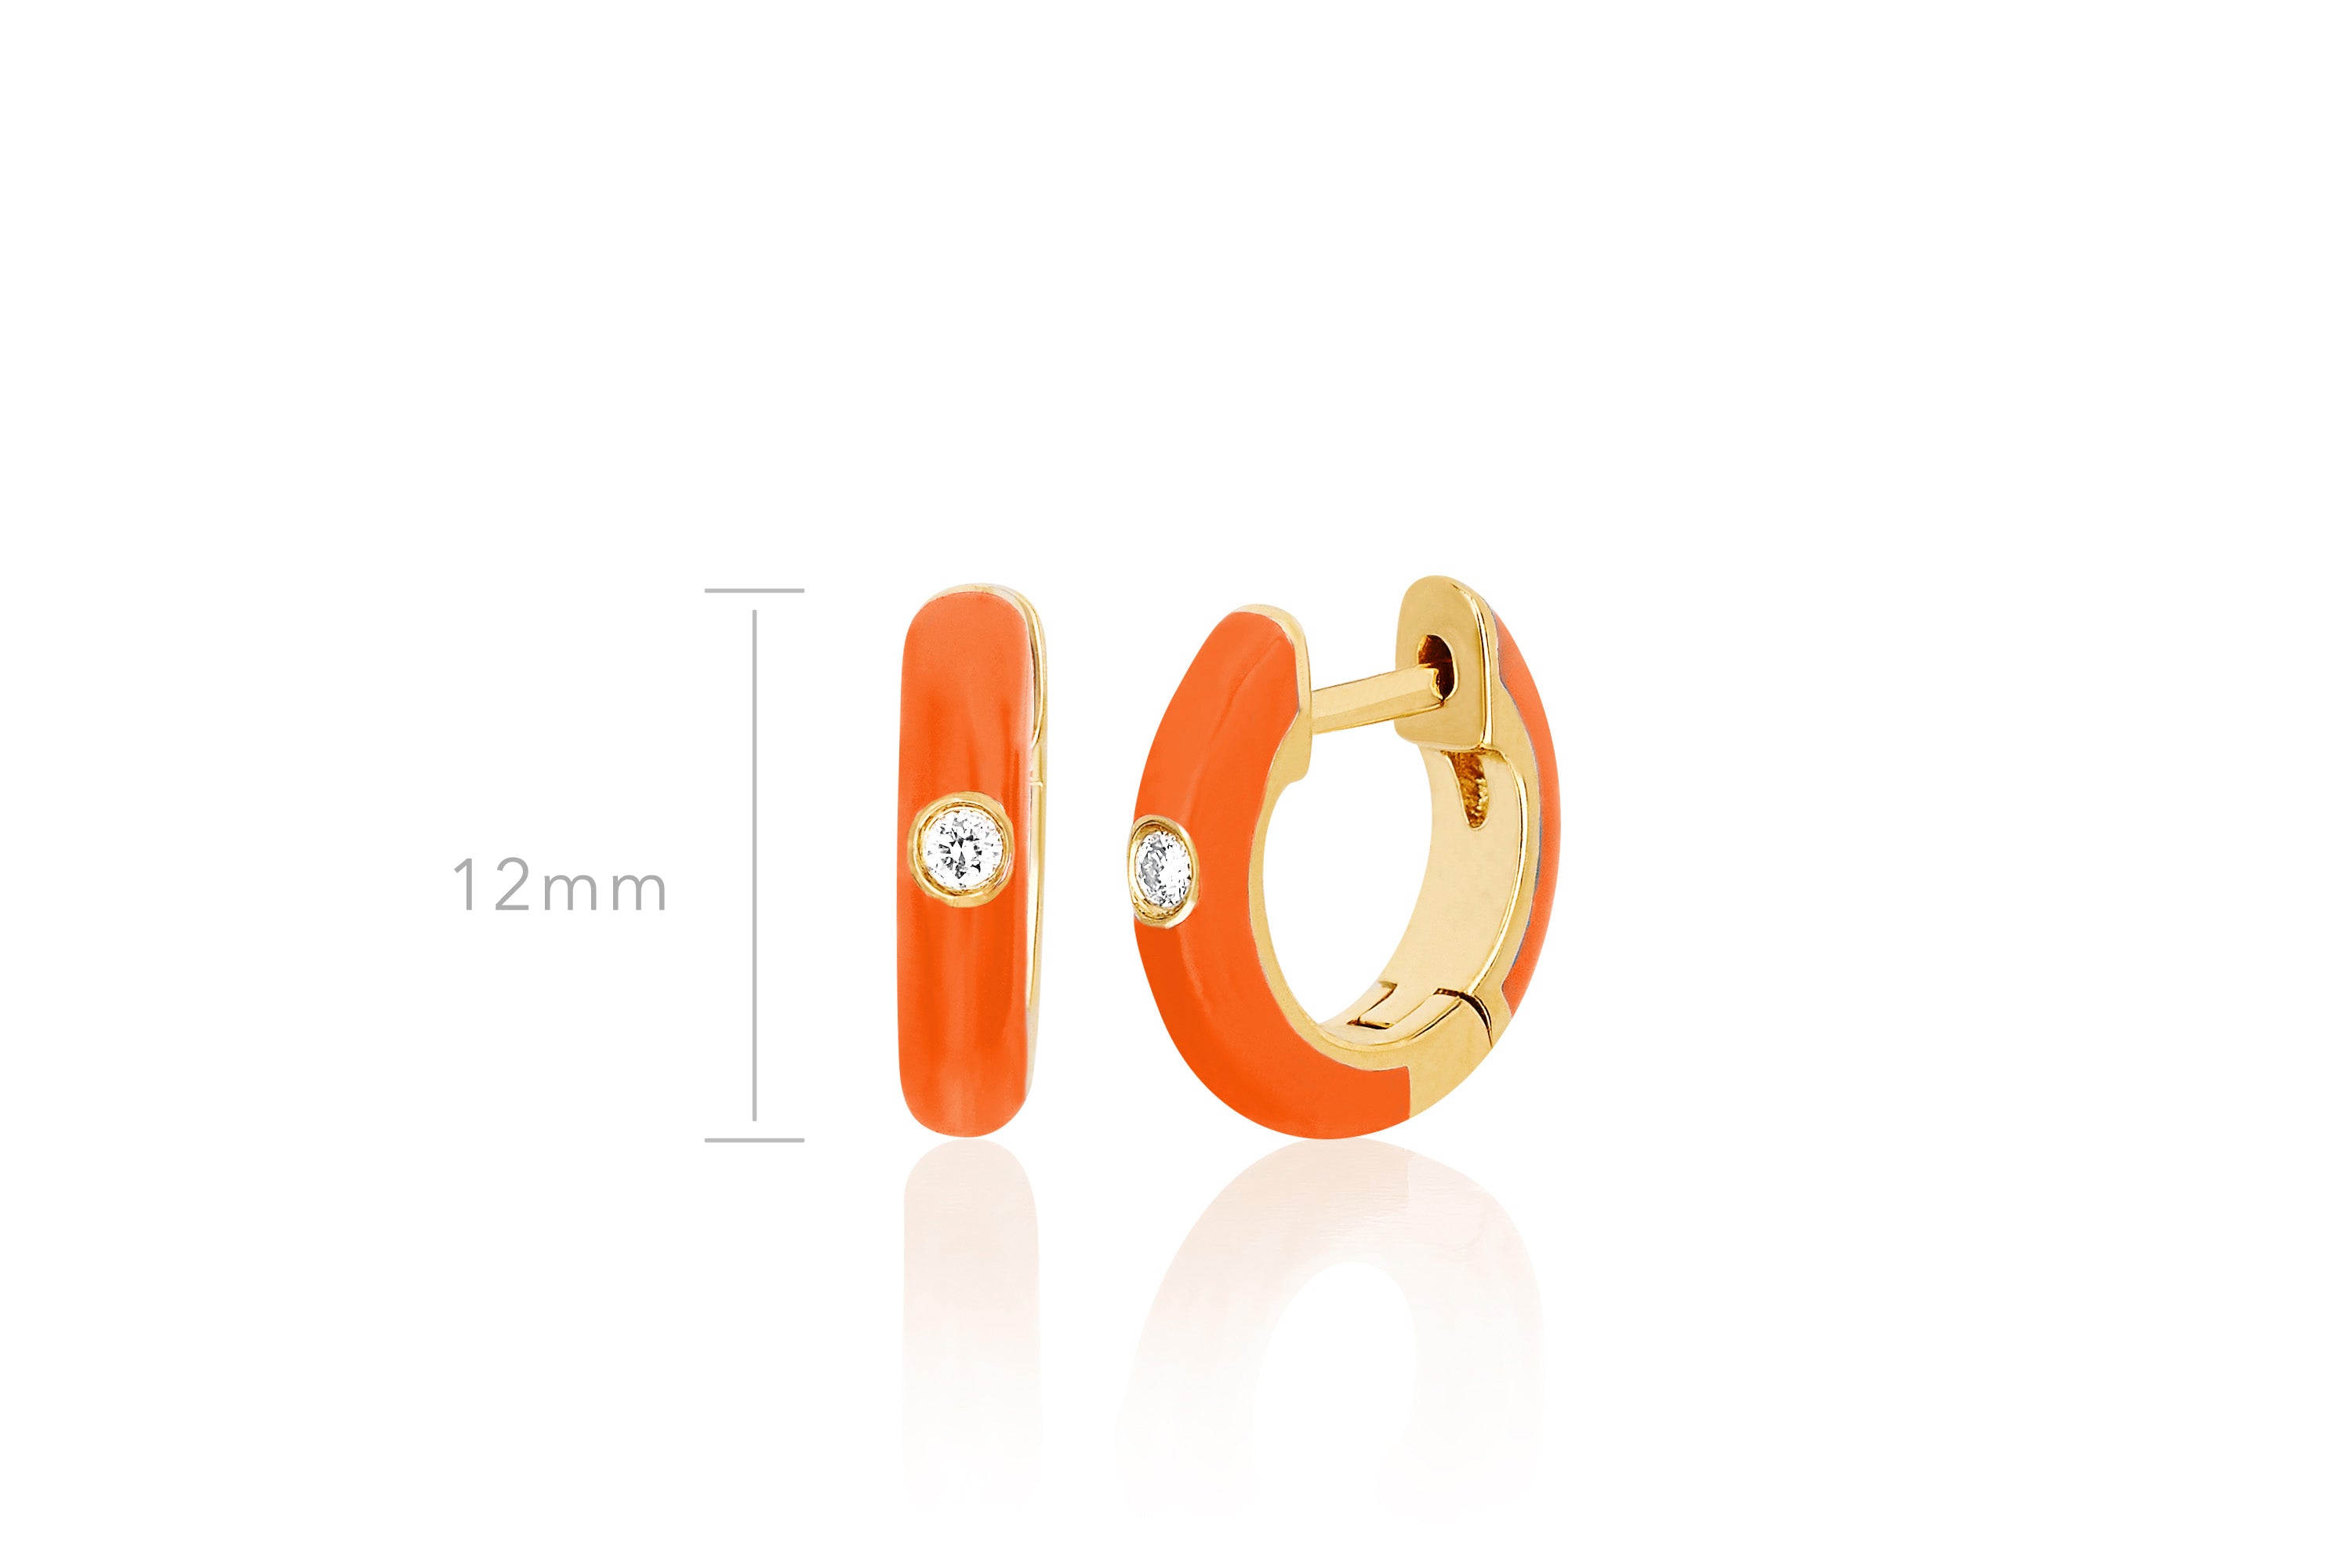 Diamond Orange Enamel Huggie Earring in 14k yellow gold with size measurement of 12mm height